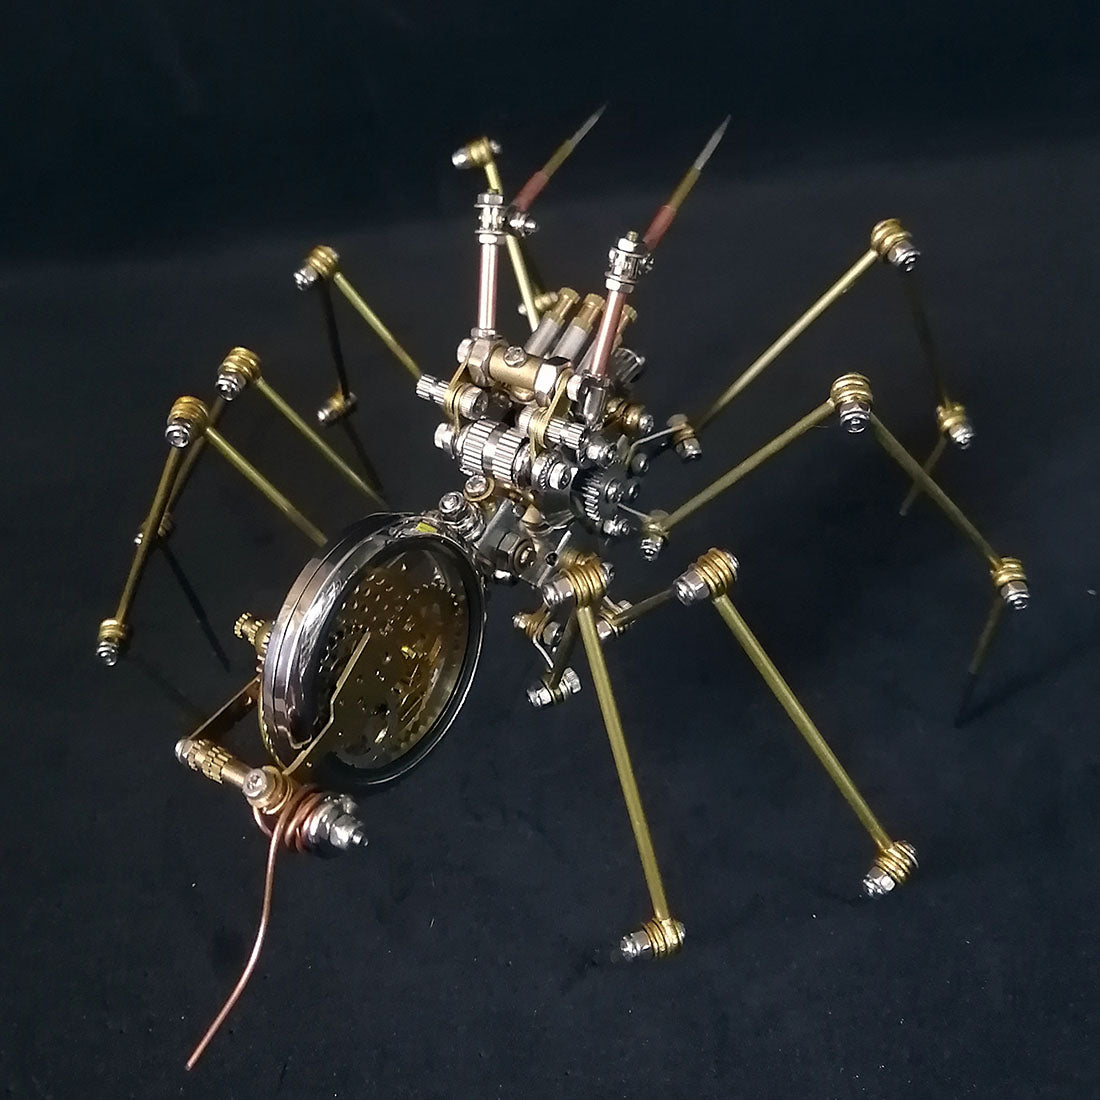 Steampunk Spider with Antique Watch Western Art Metal Model Kits